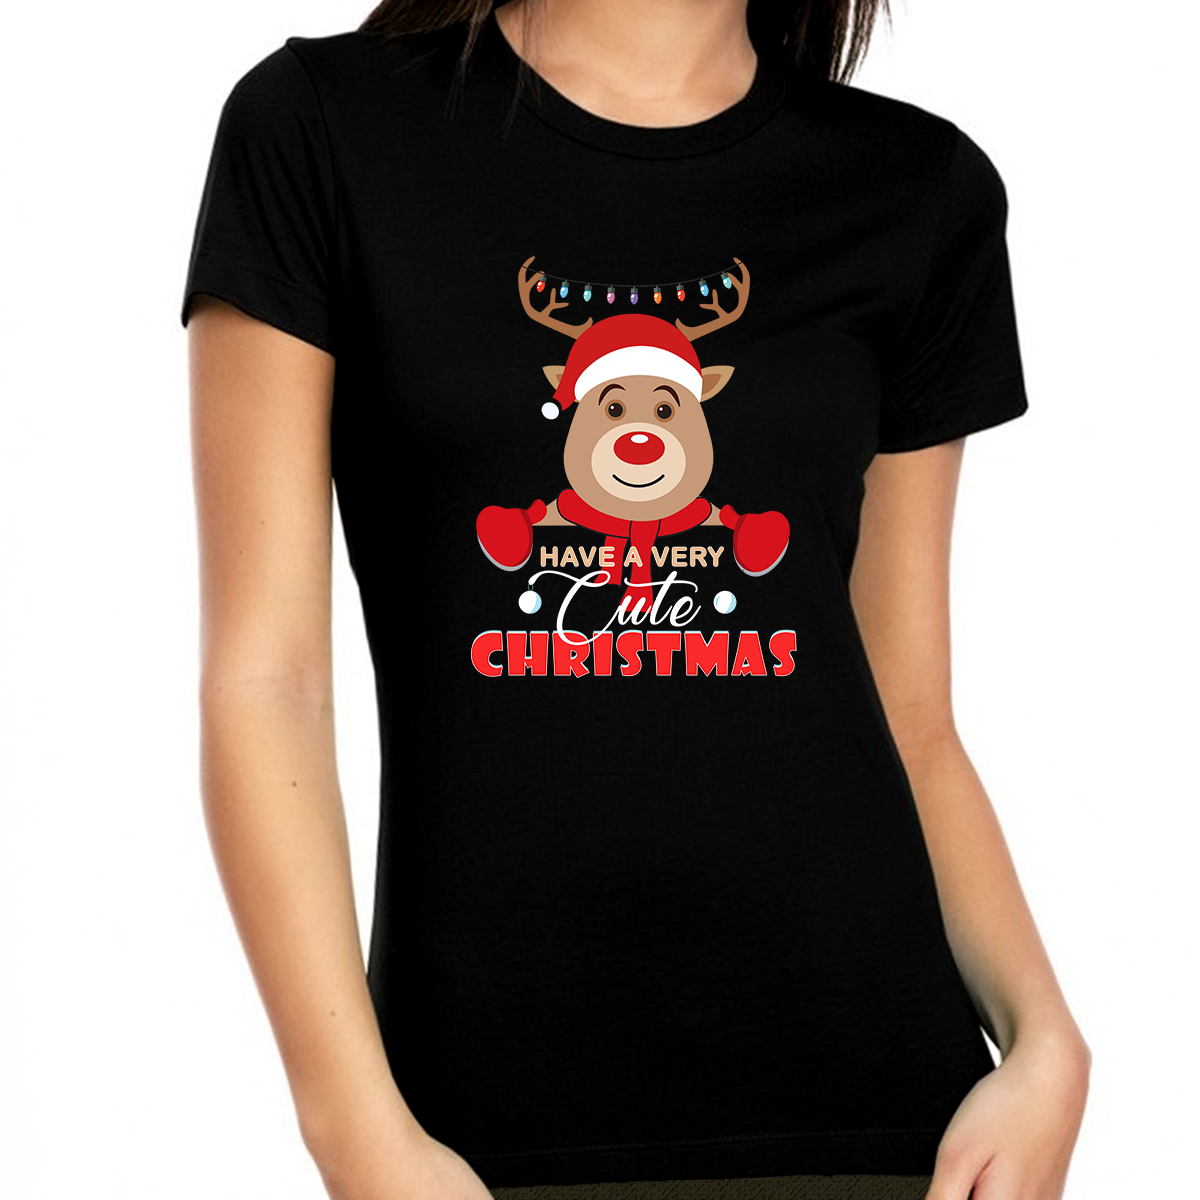 Cute Christmas Shirts for Women Christmas Clothes Womens Christmas Shirt Christmas Pajamas Shirt